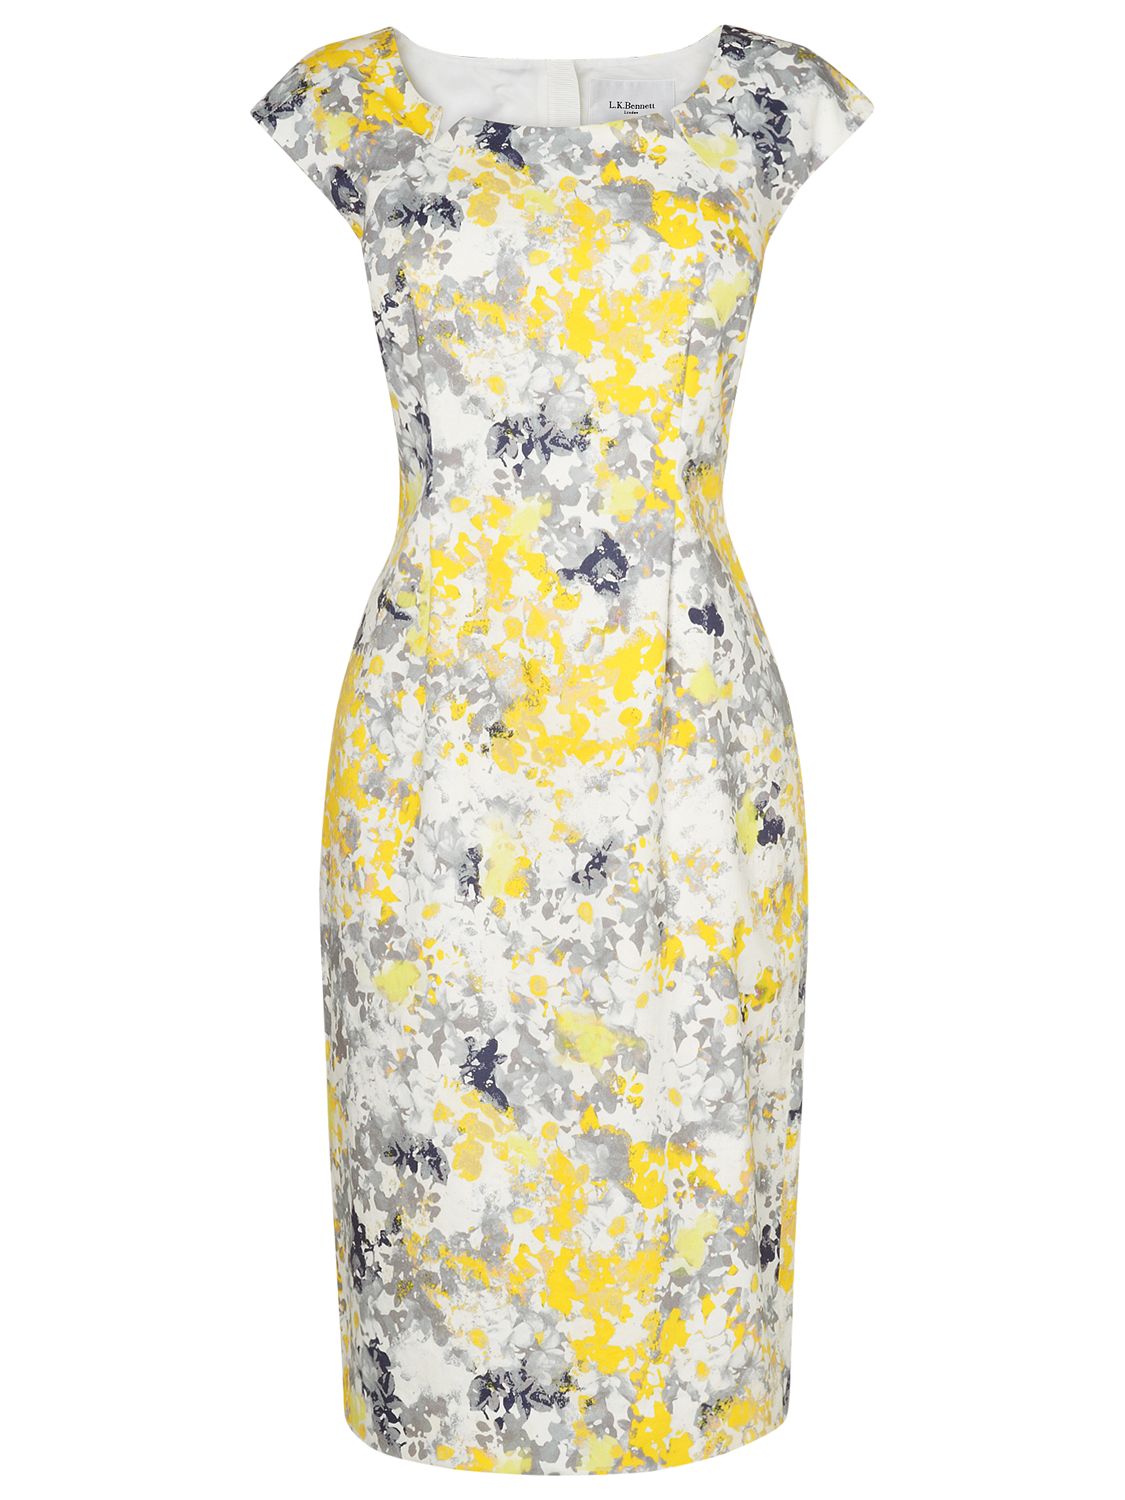 L.K. Bennett Hannah Printed Cotton Dress, Yellow at John Lewis & Partners